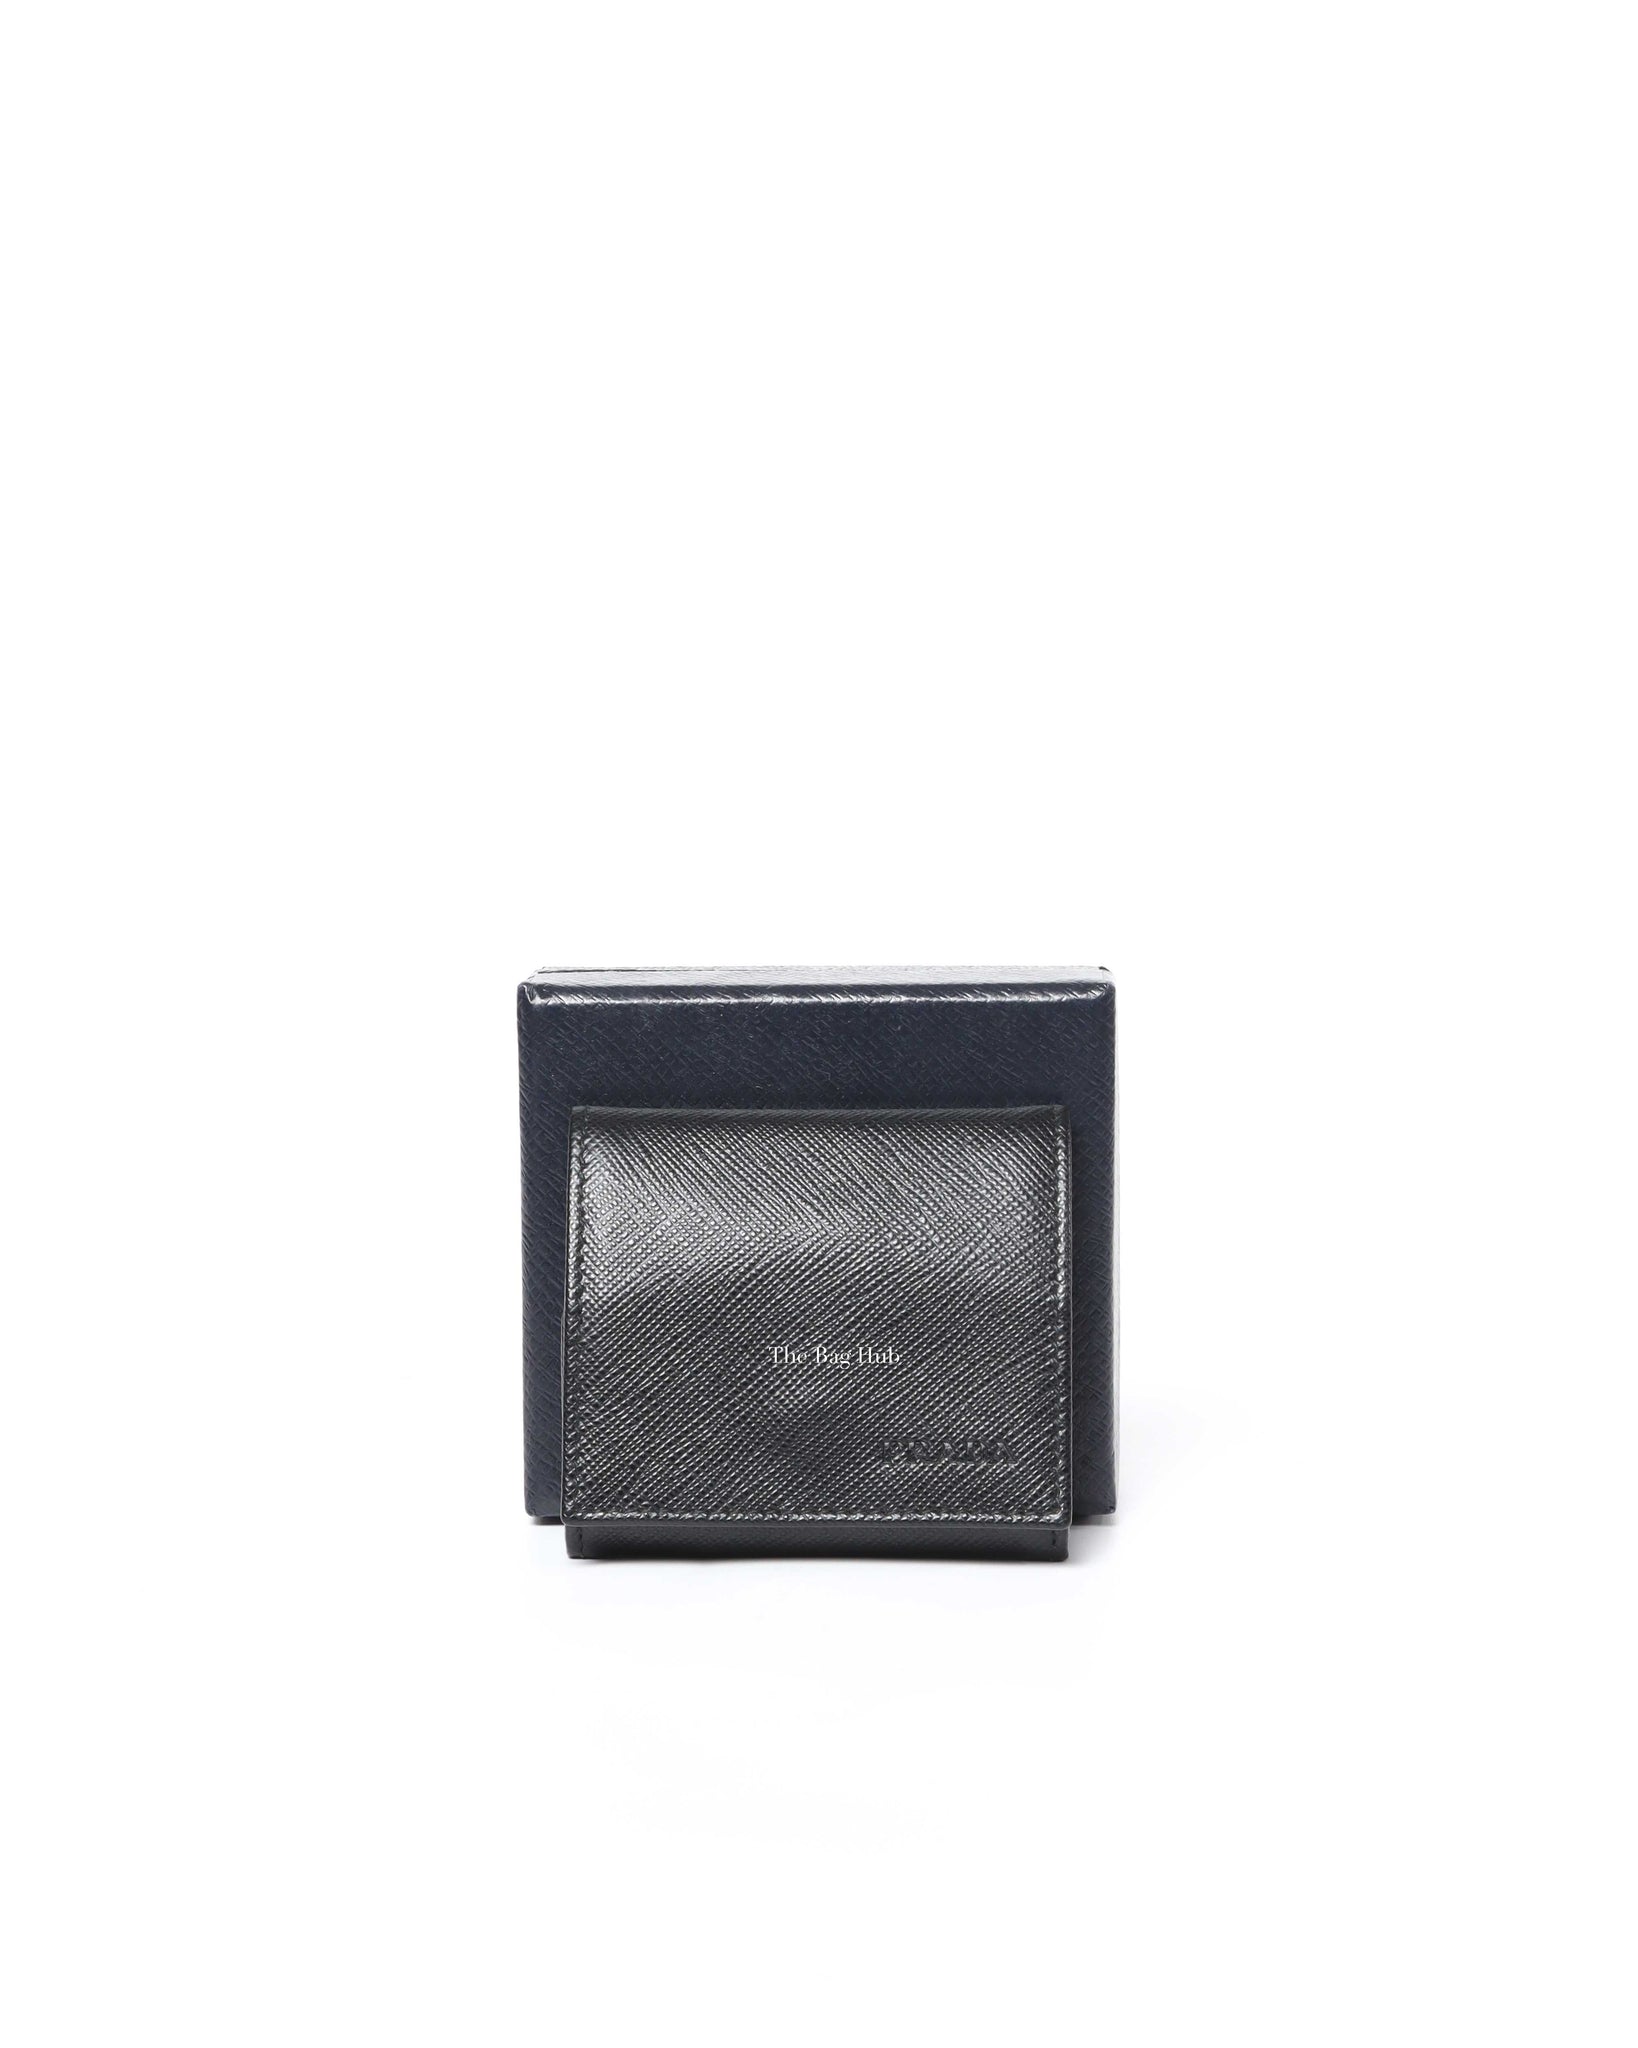 Shop PRADA SAFFIANO LUX Plain Leather Outlet Coin Cases by raraperc